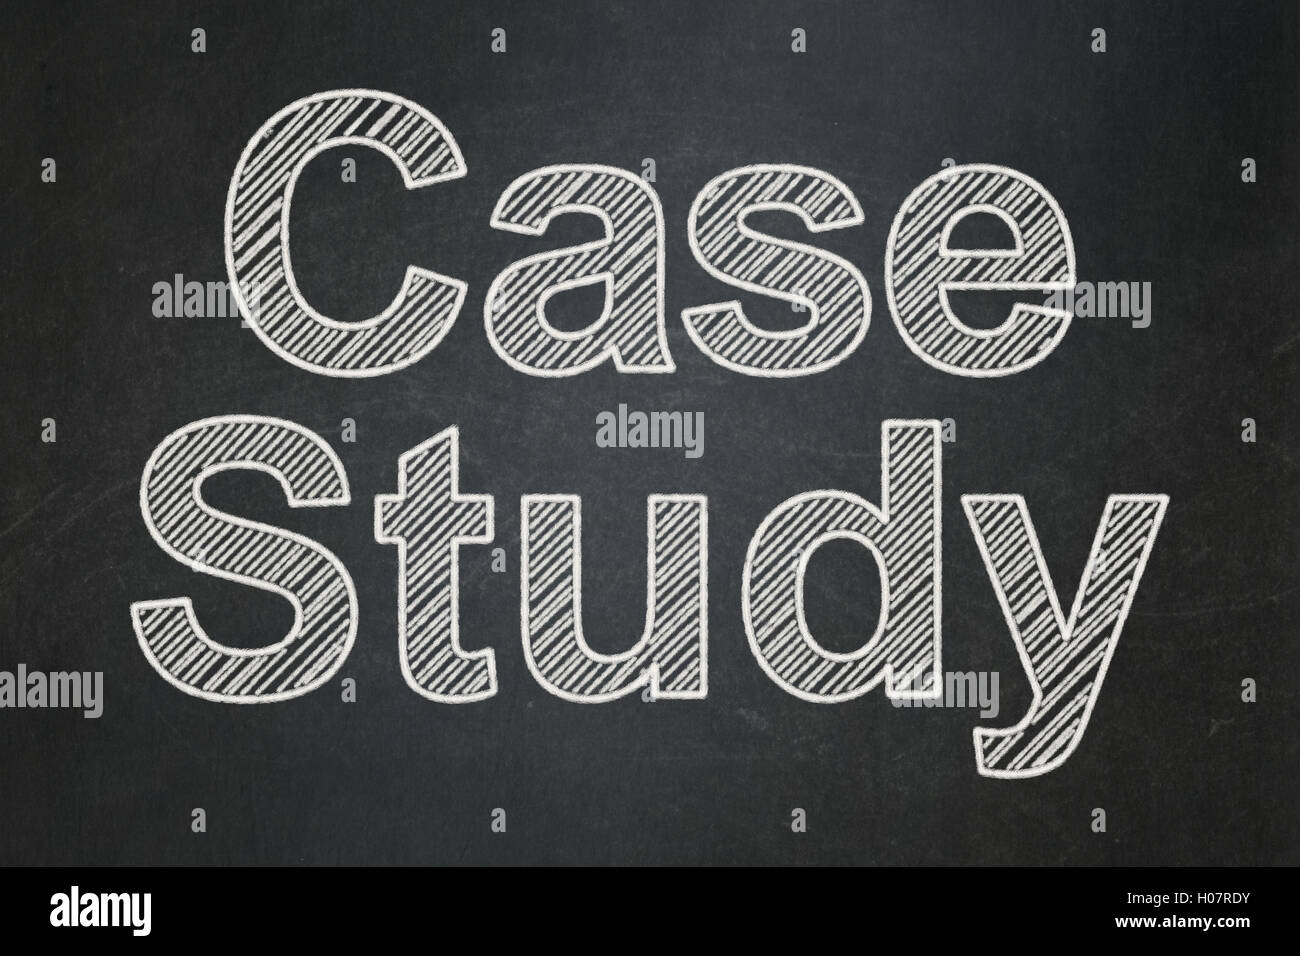 Education concept: Case Study on chalkboard background Stock Photo